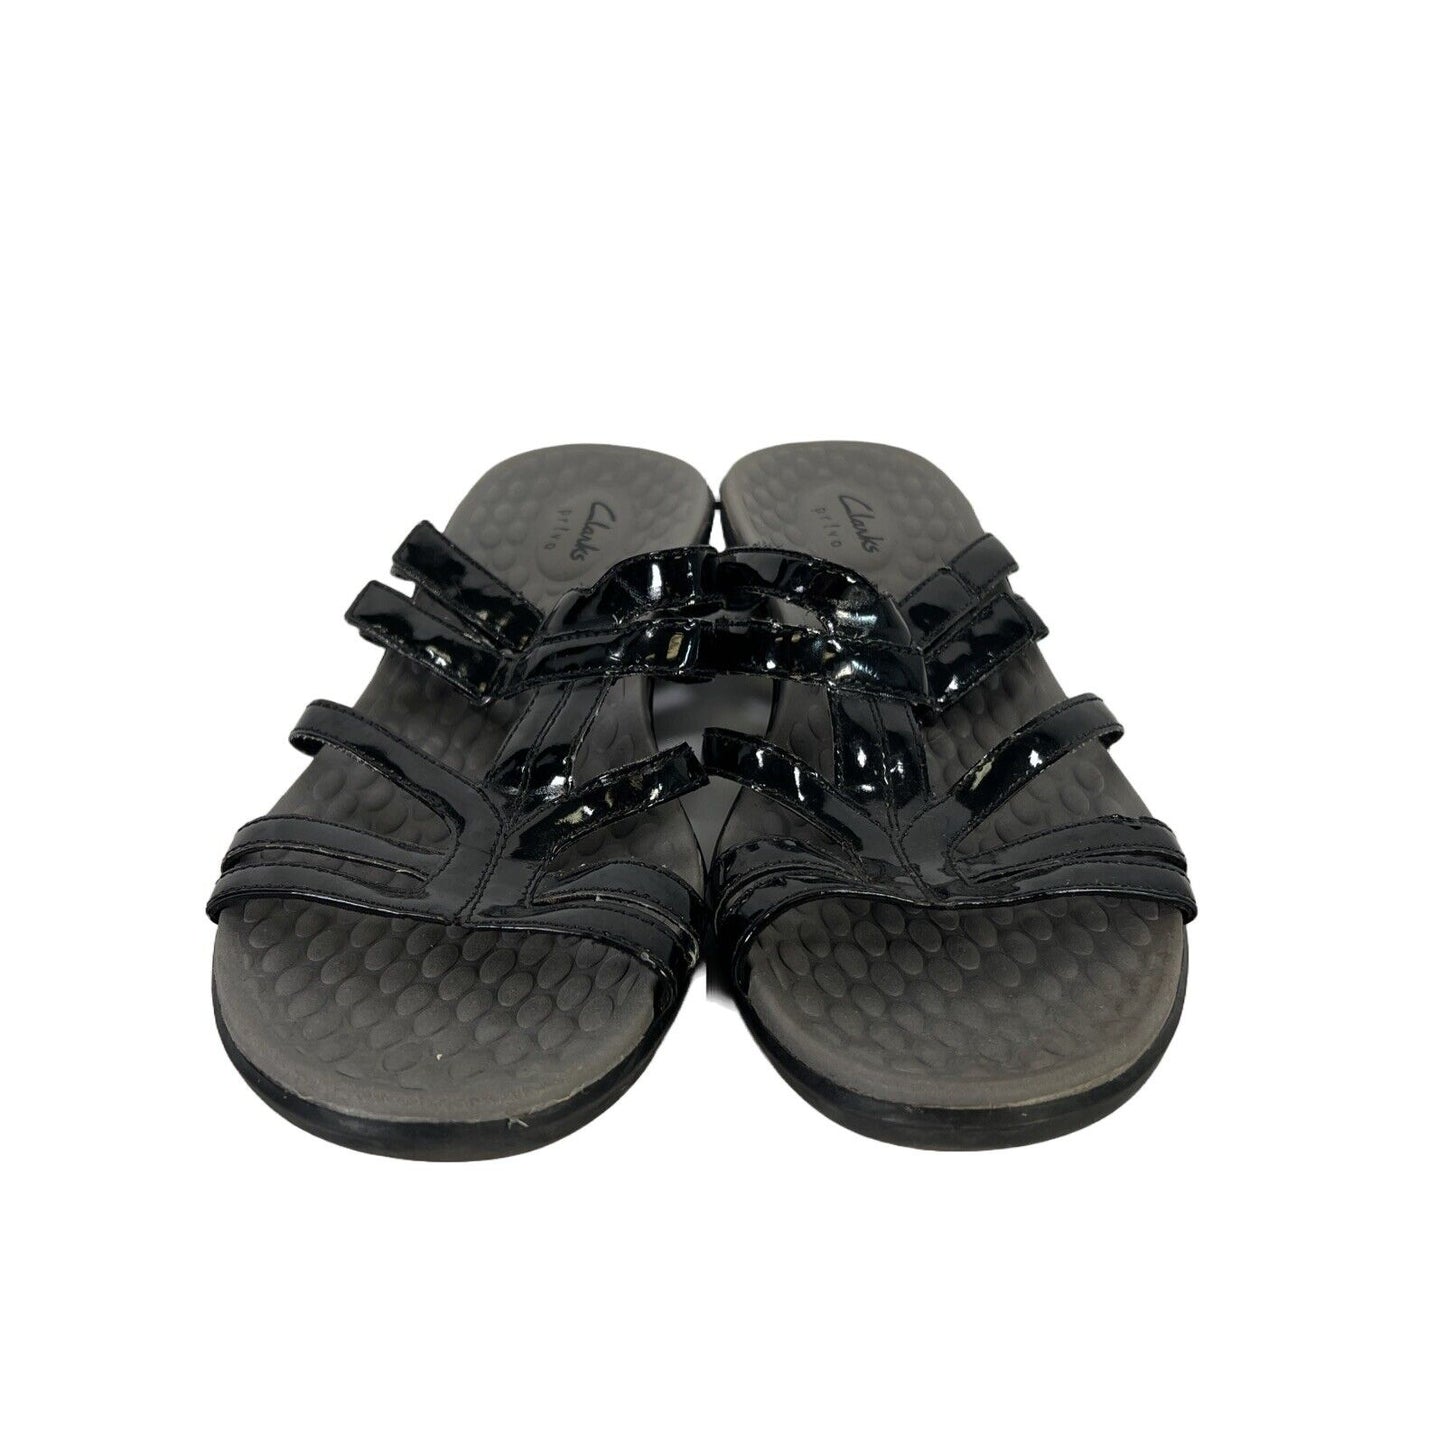 Clarks Women's Black Patent Privo Strappy Sandals - 11M